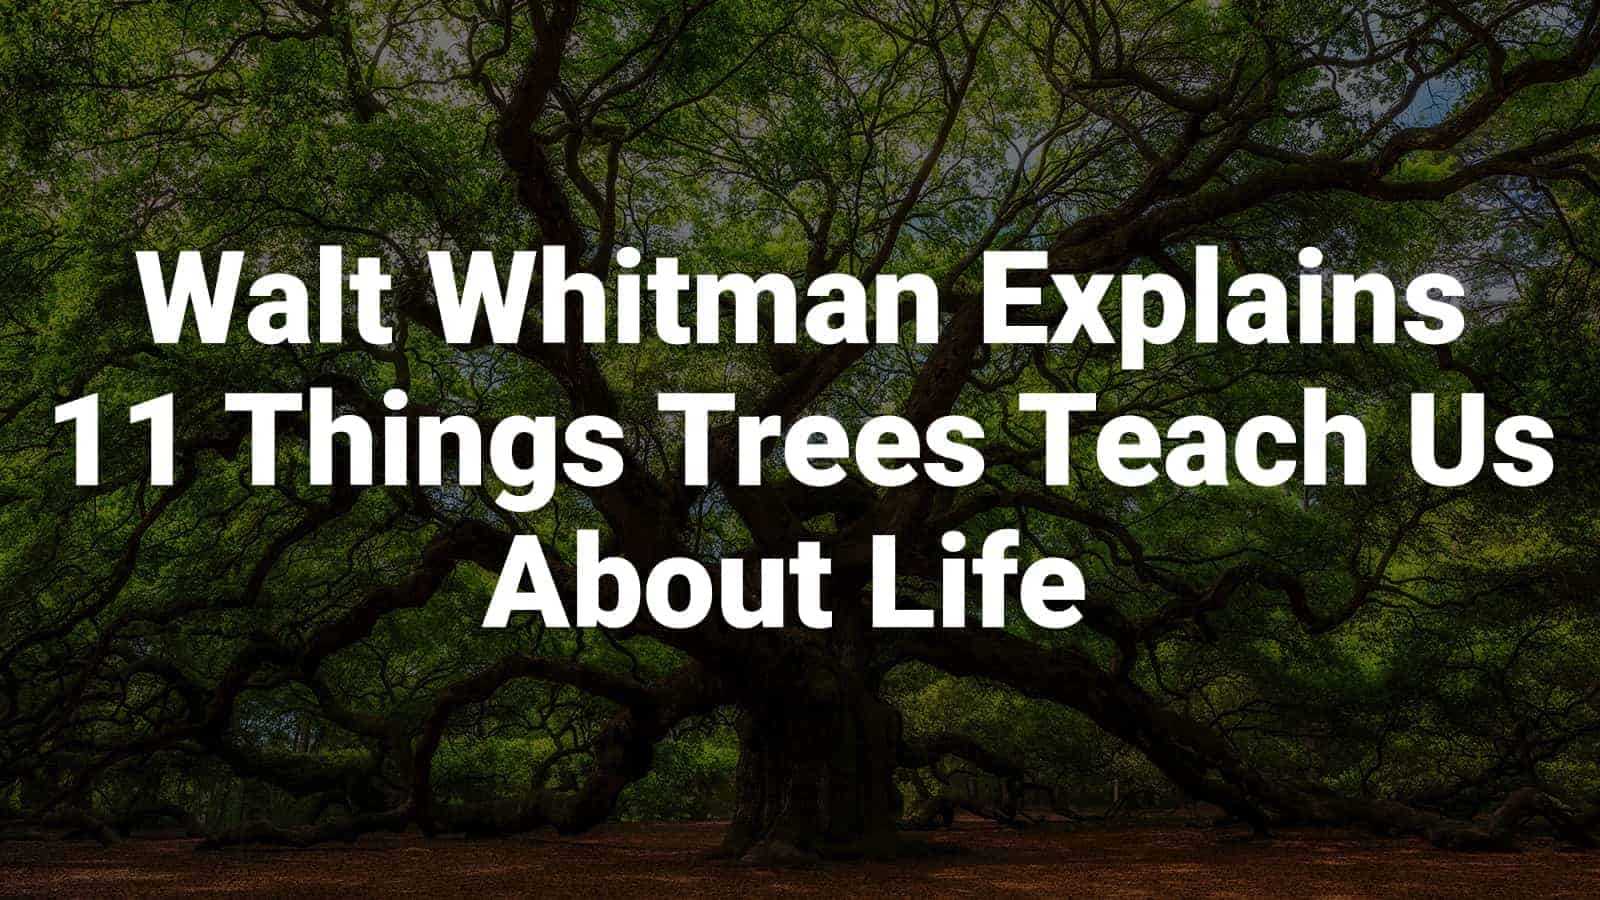 Walt Whitman Explains 11 Things Trees Teach Us About Life